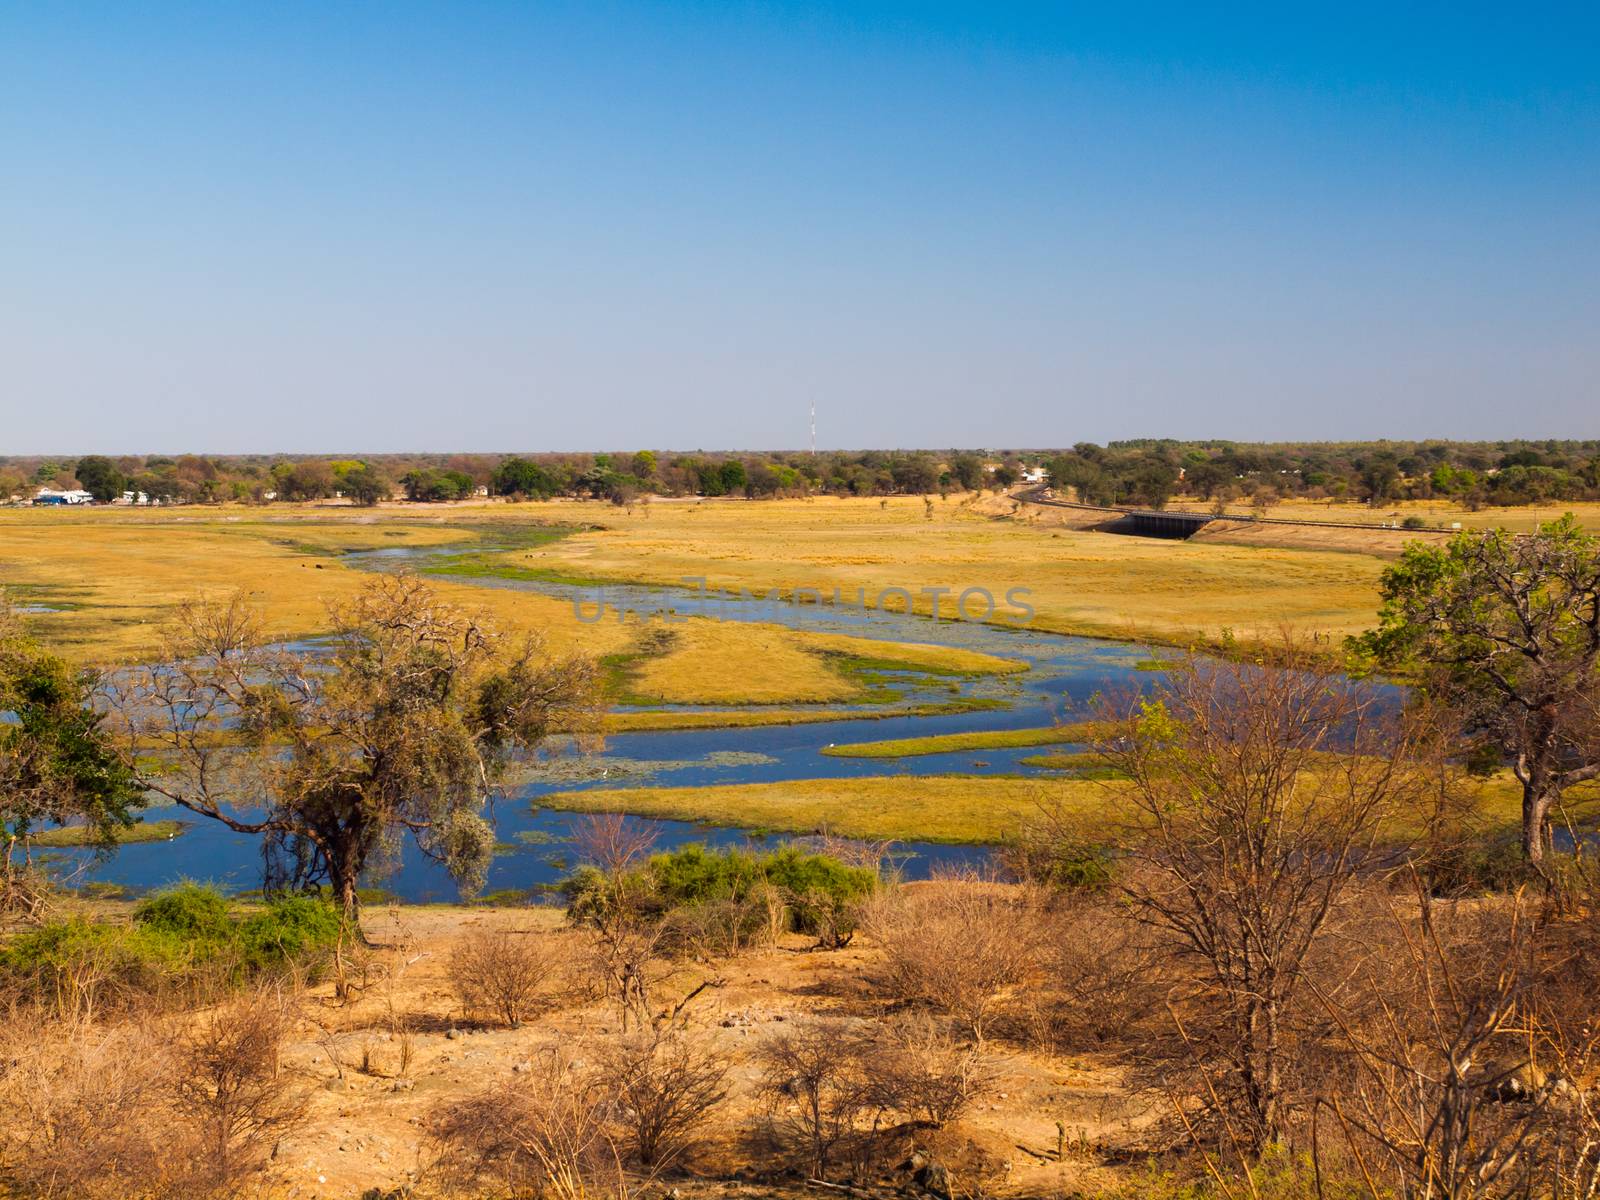 Chobe river on the border between Botswana and Namibia